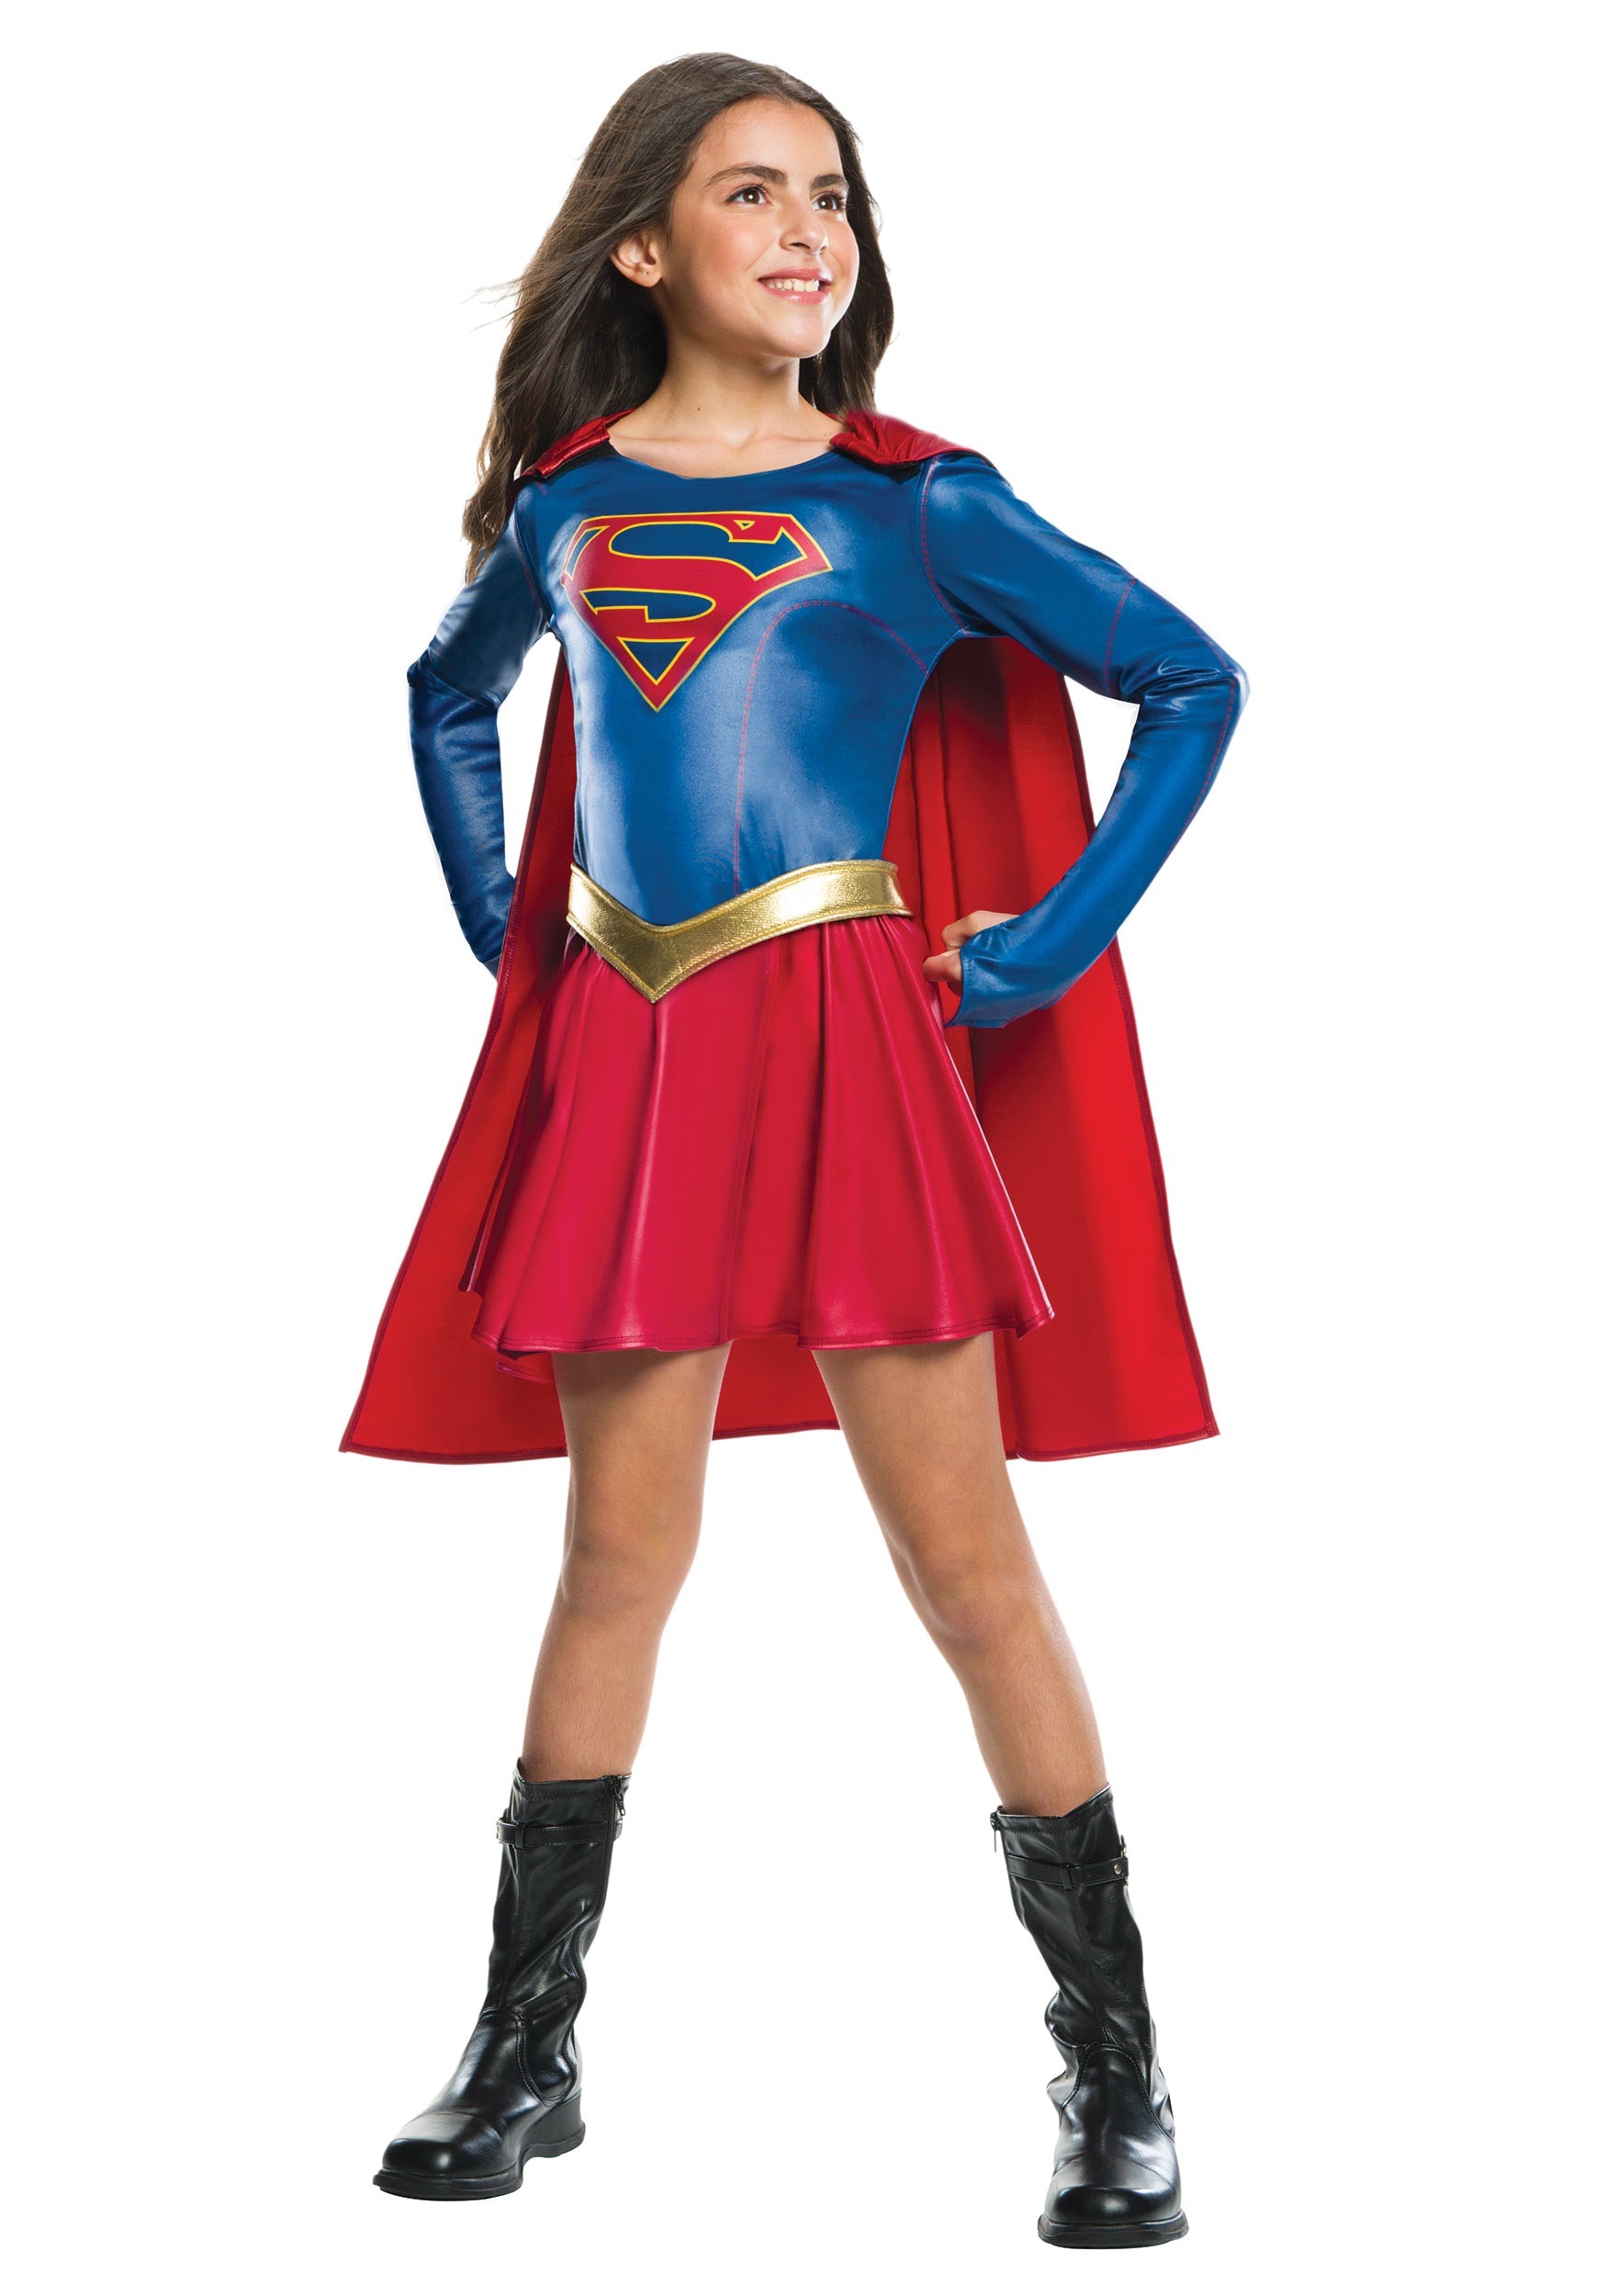 Superhero Costume For Girls